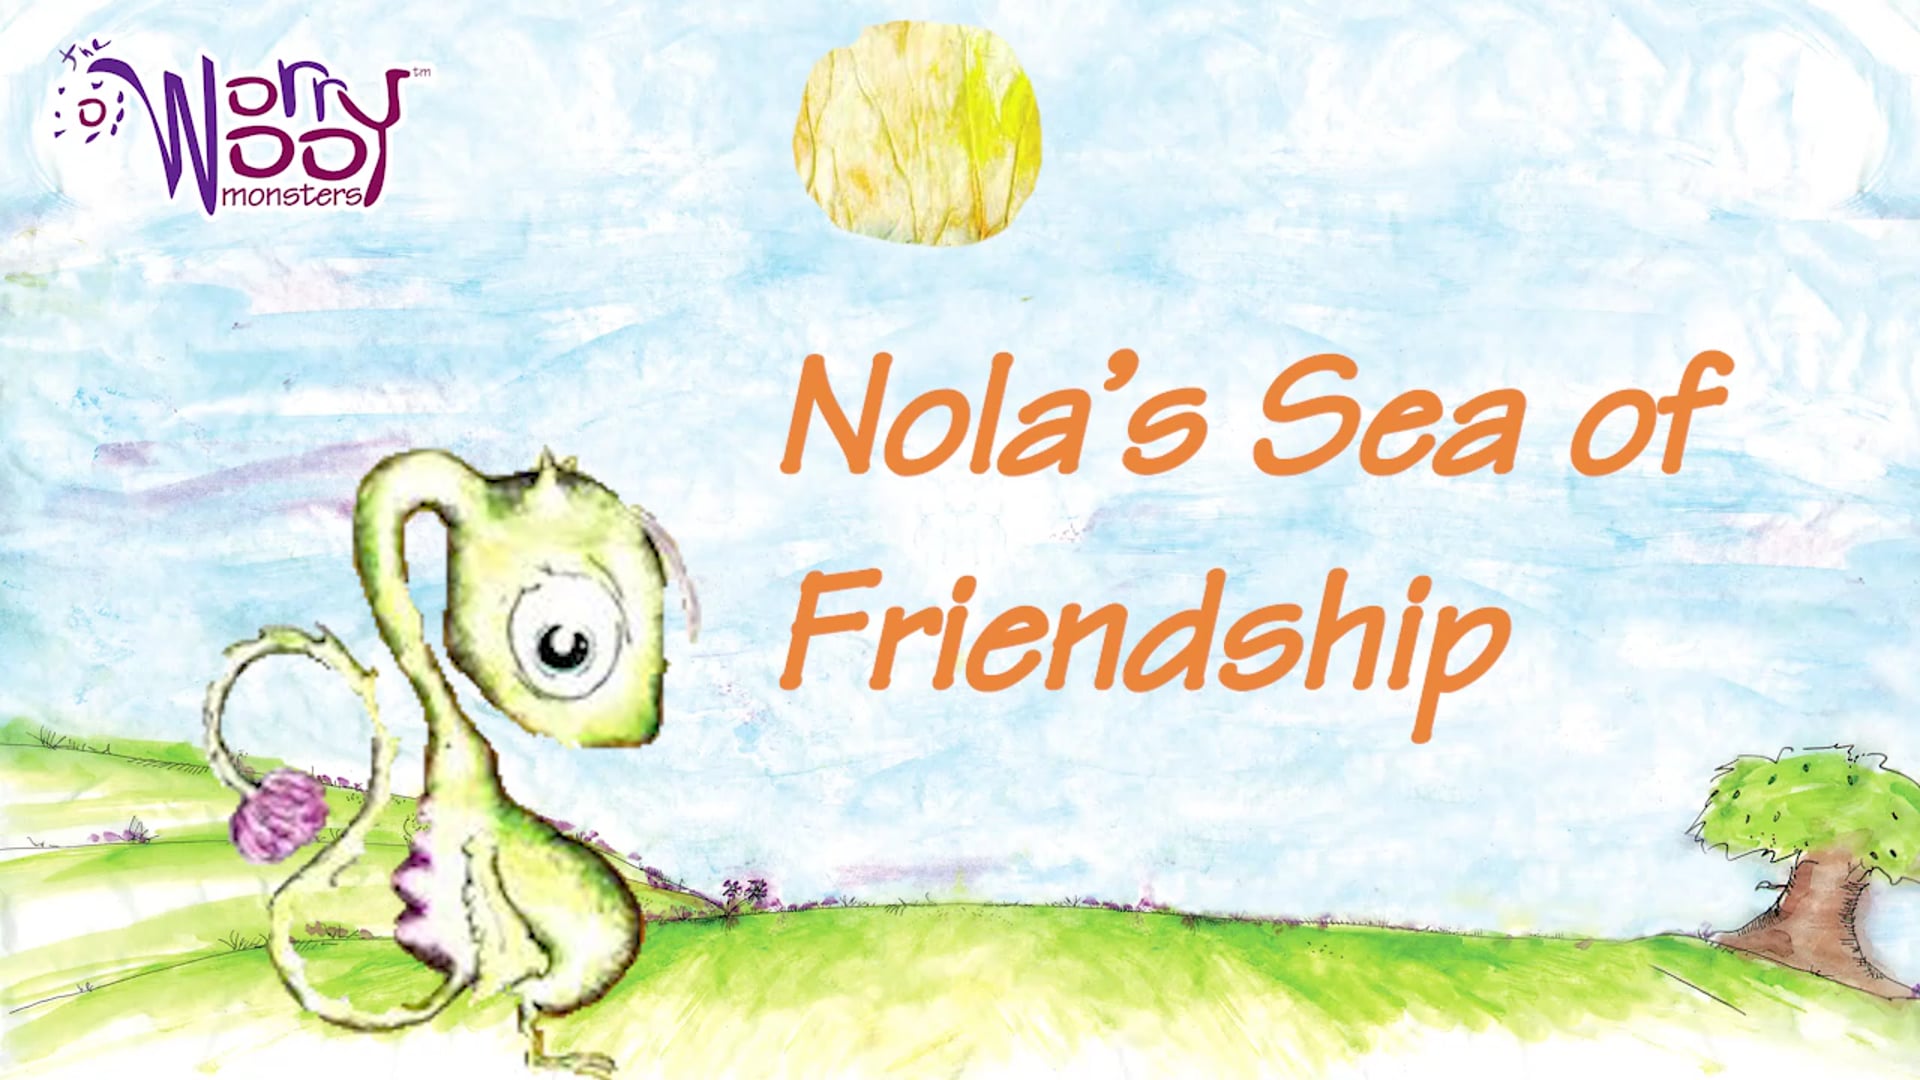 Nola's Sea of FriendShip